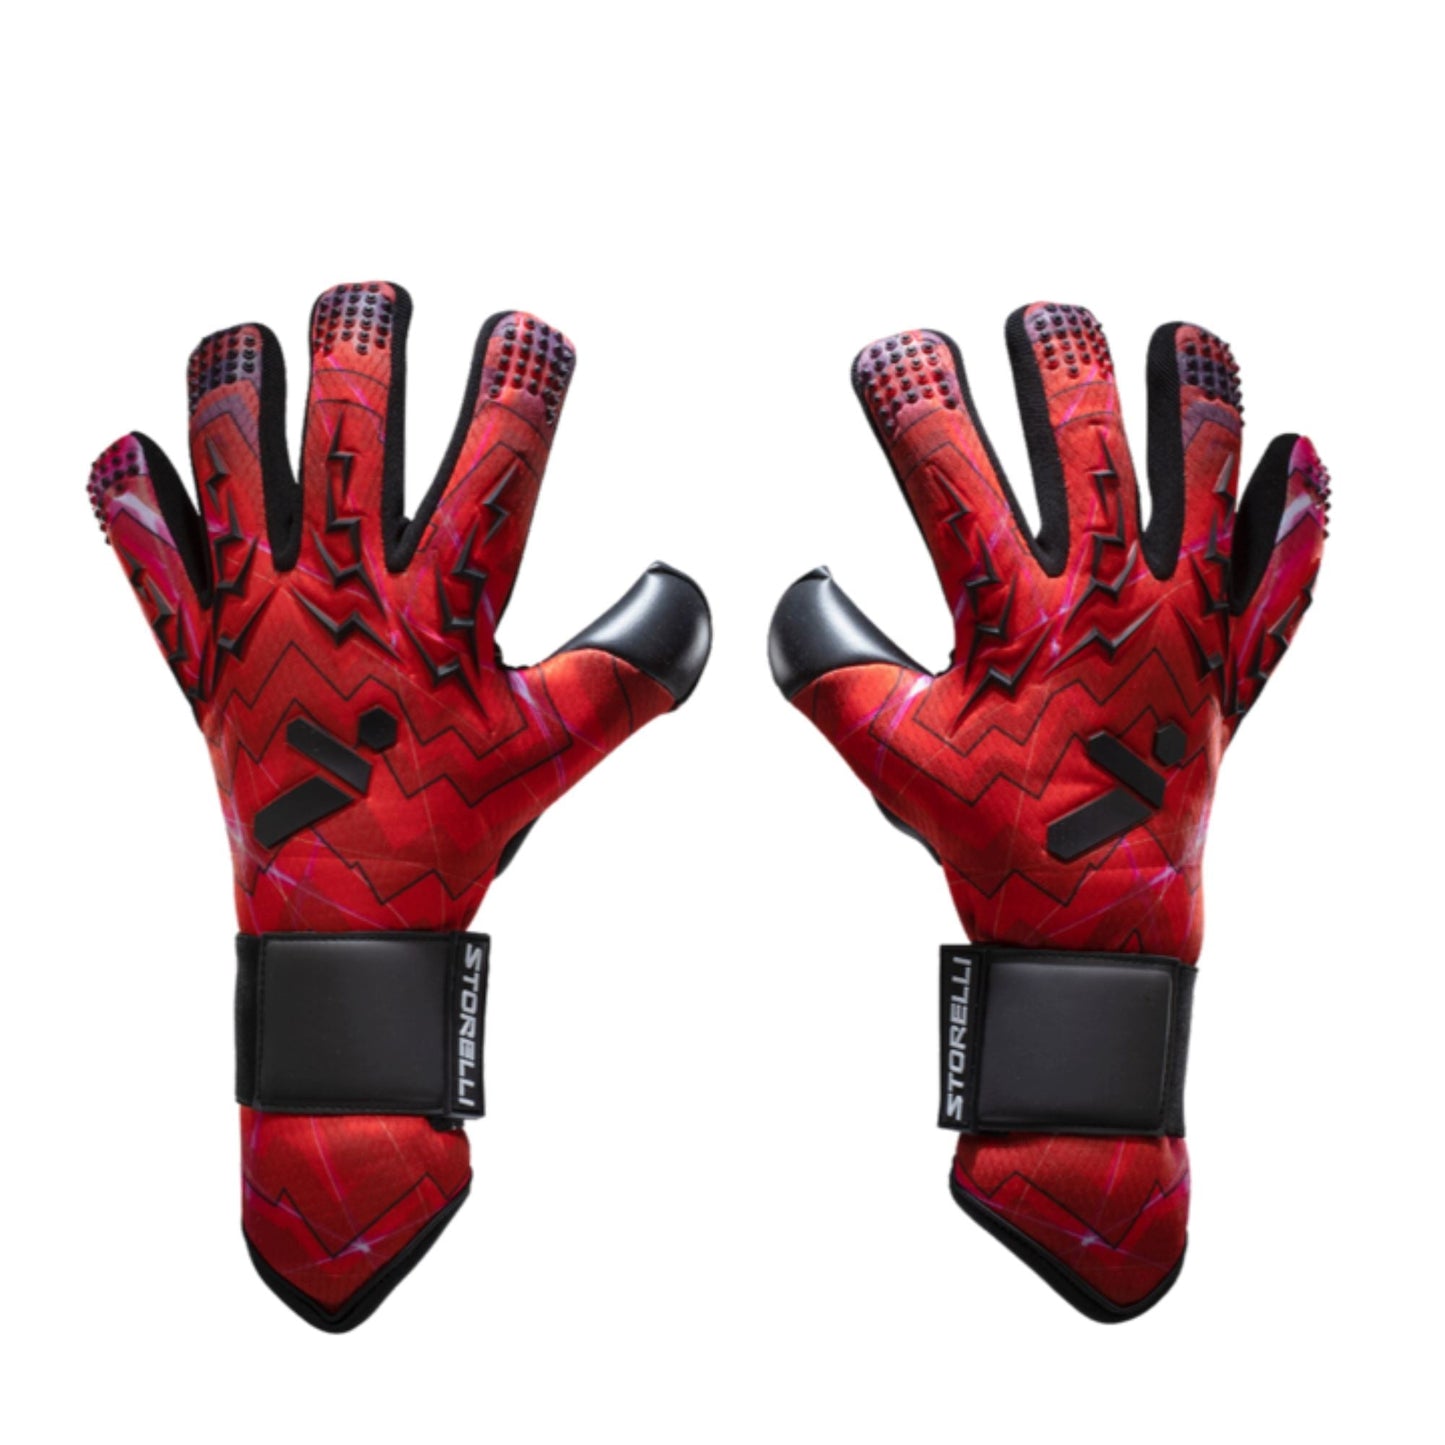 Lightening Goalkeeper Gloves by Storelli - ITASPORT